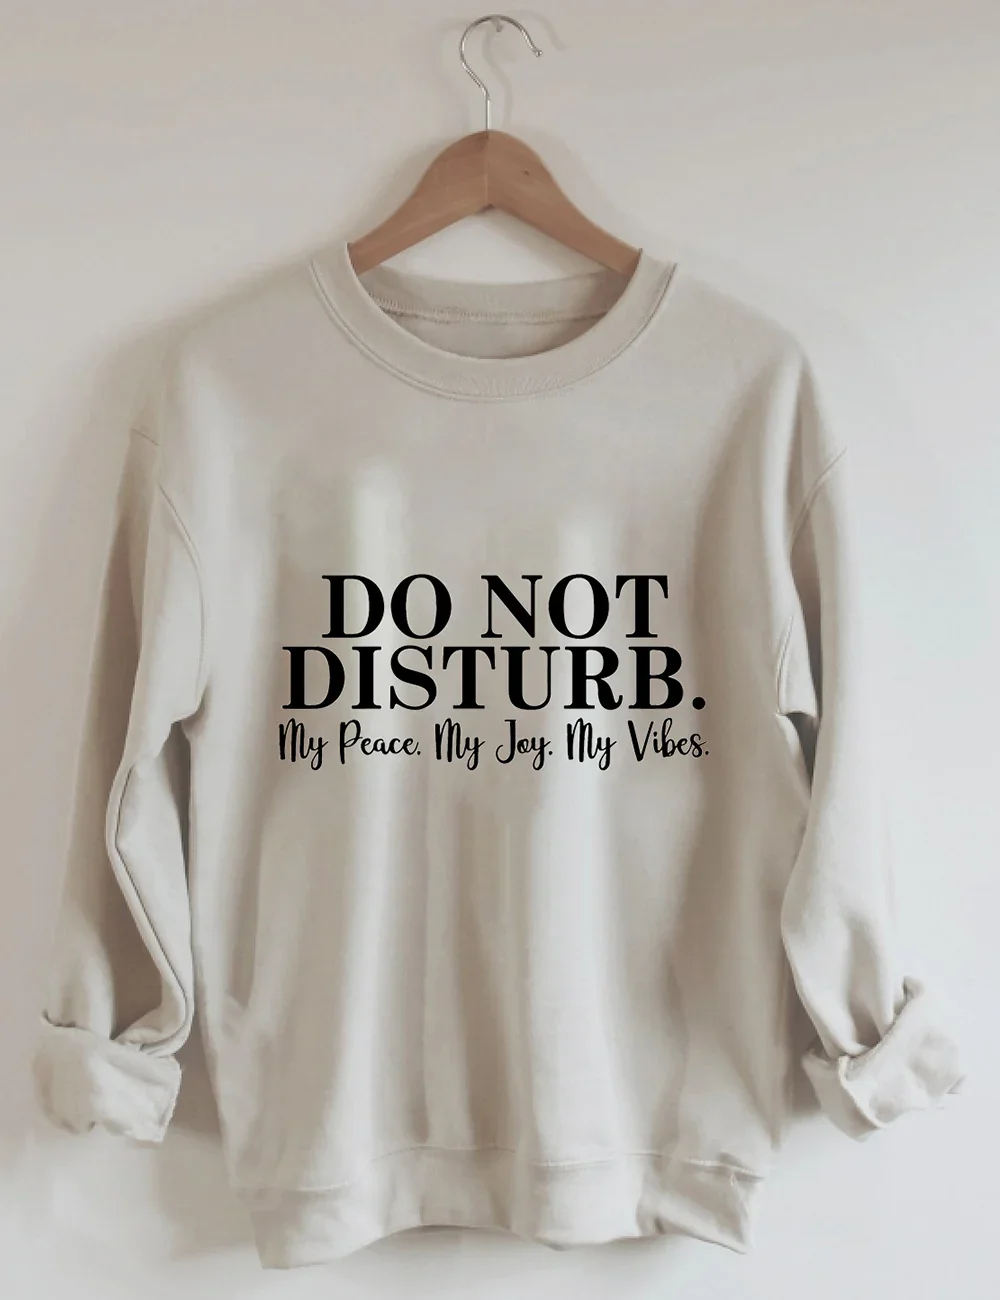 Do Not Disturb Sweatshirt